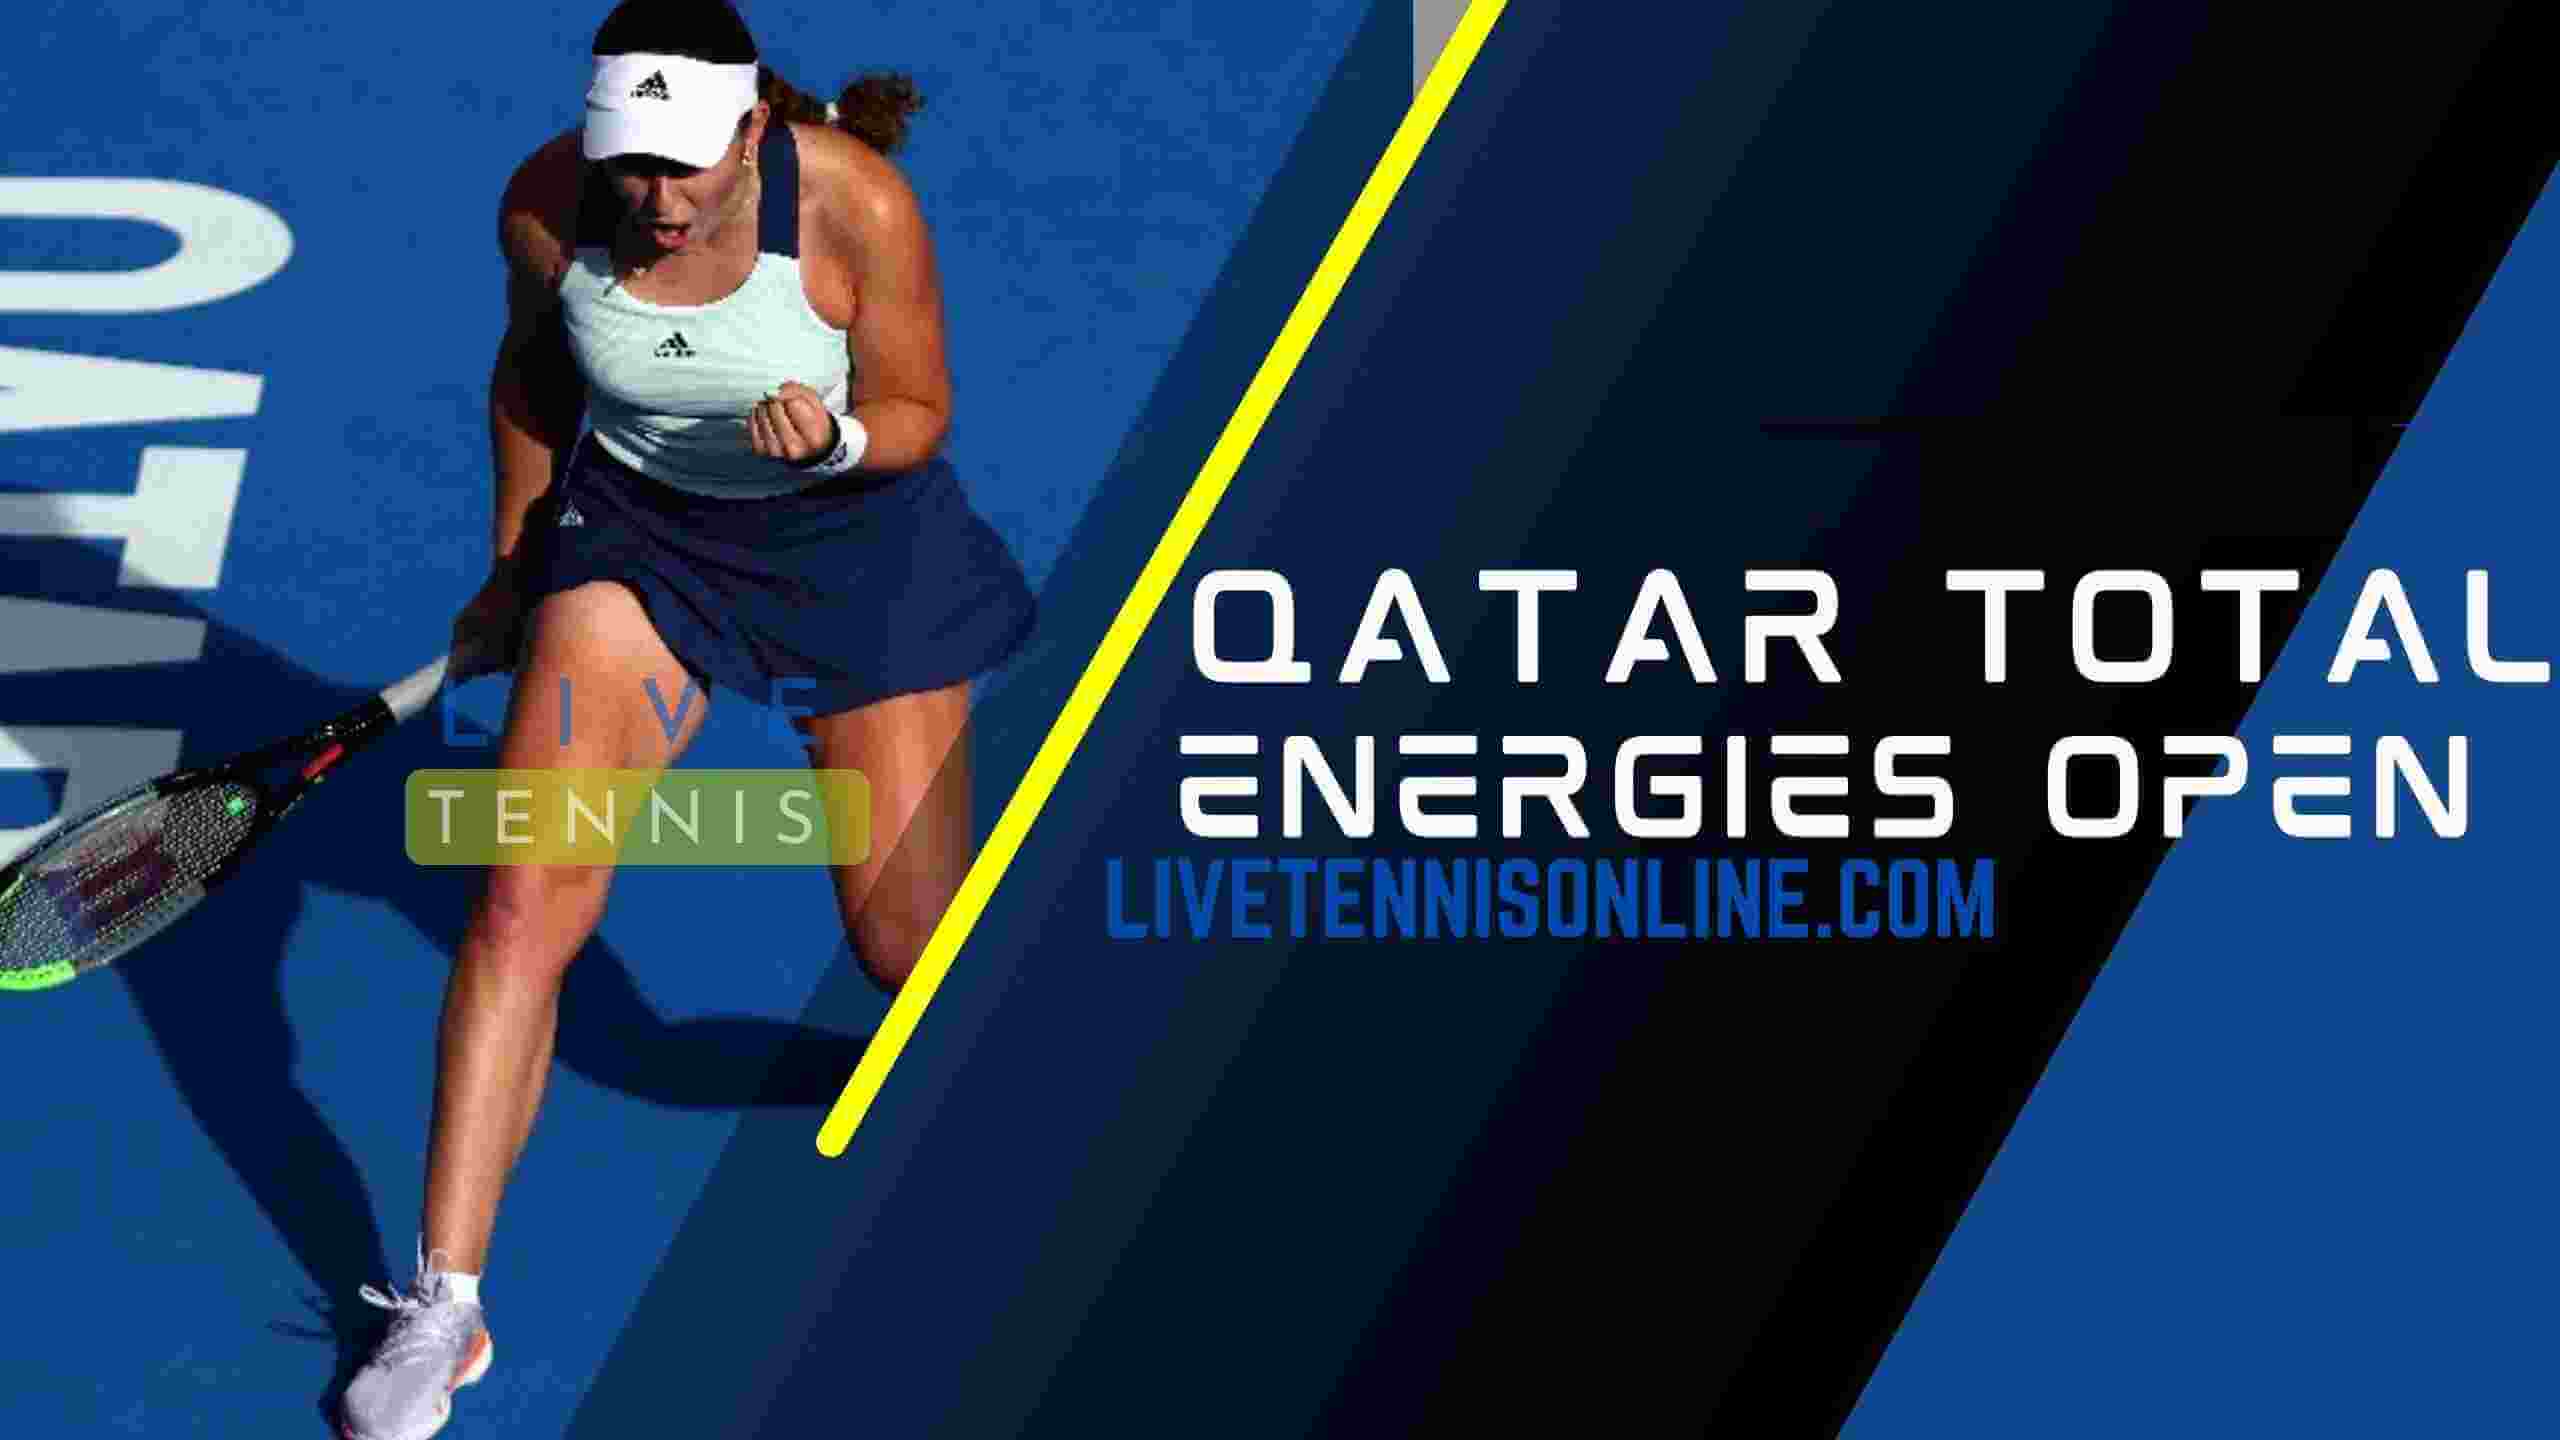 WTA Qatar Total Open 2018 Live Stream